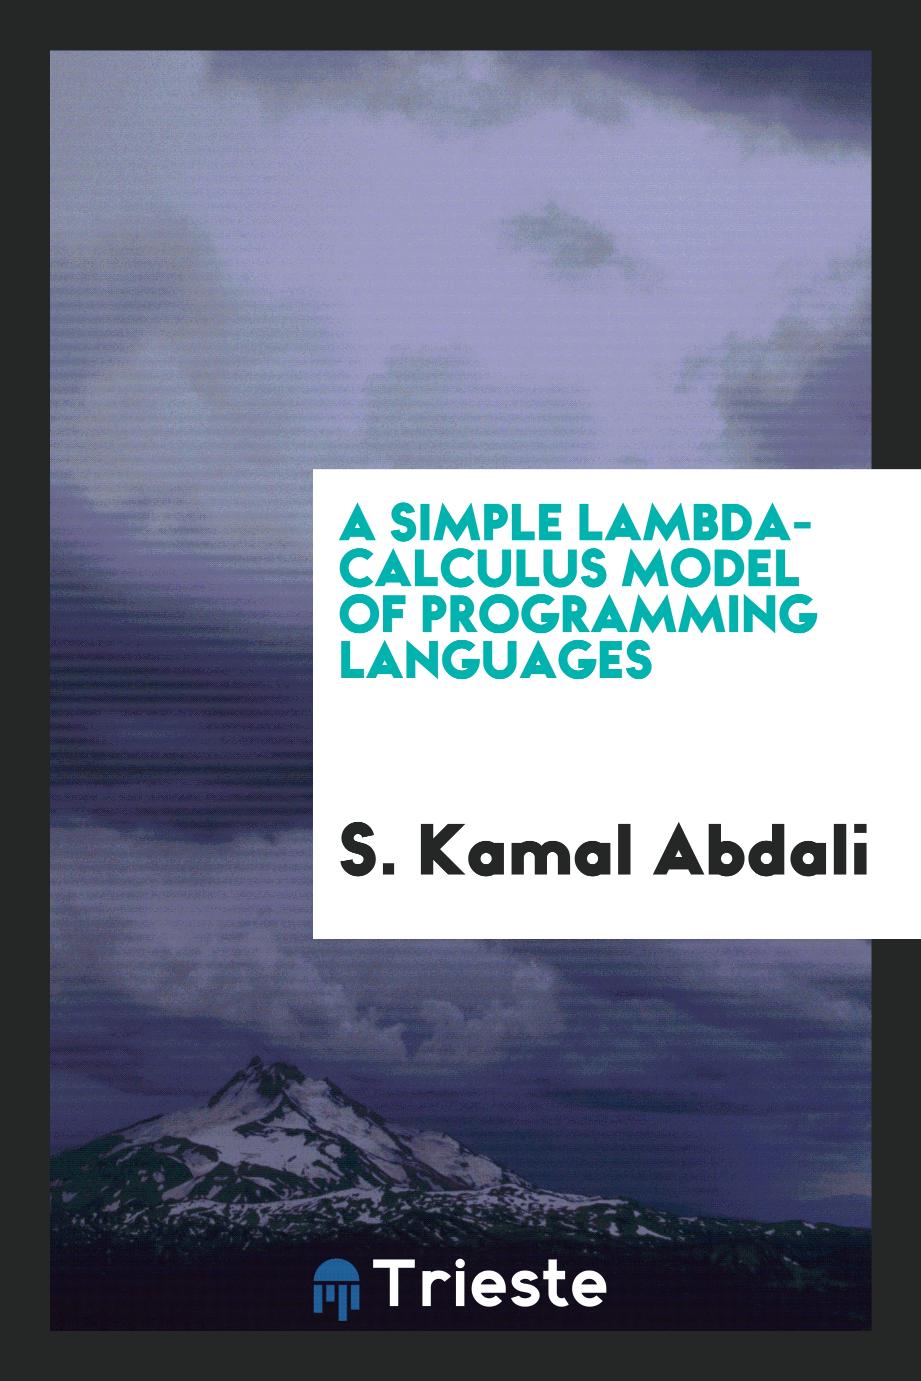 A simple lambda-calculus model of programming languages